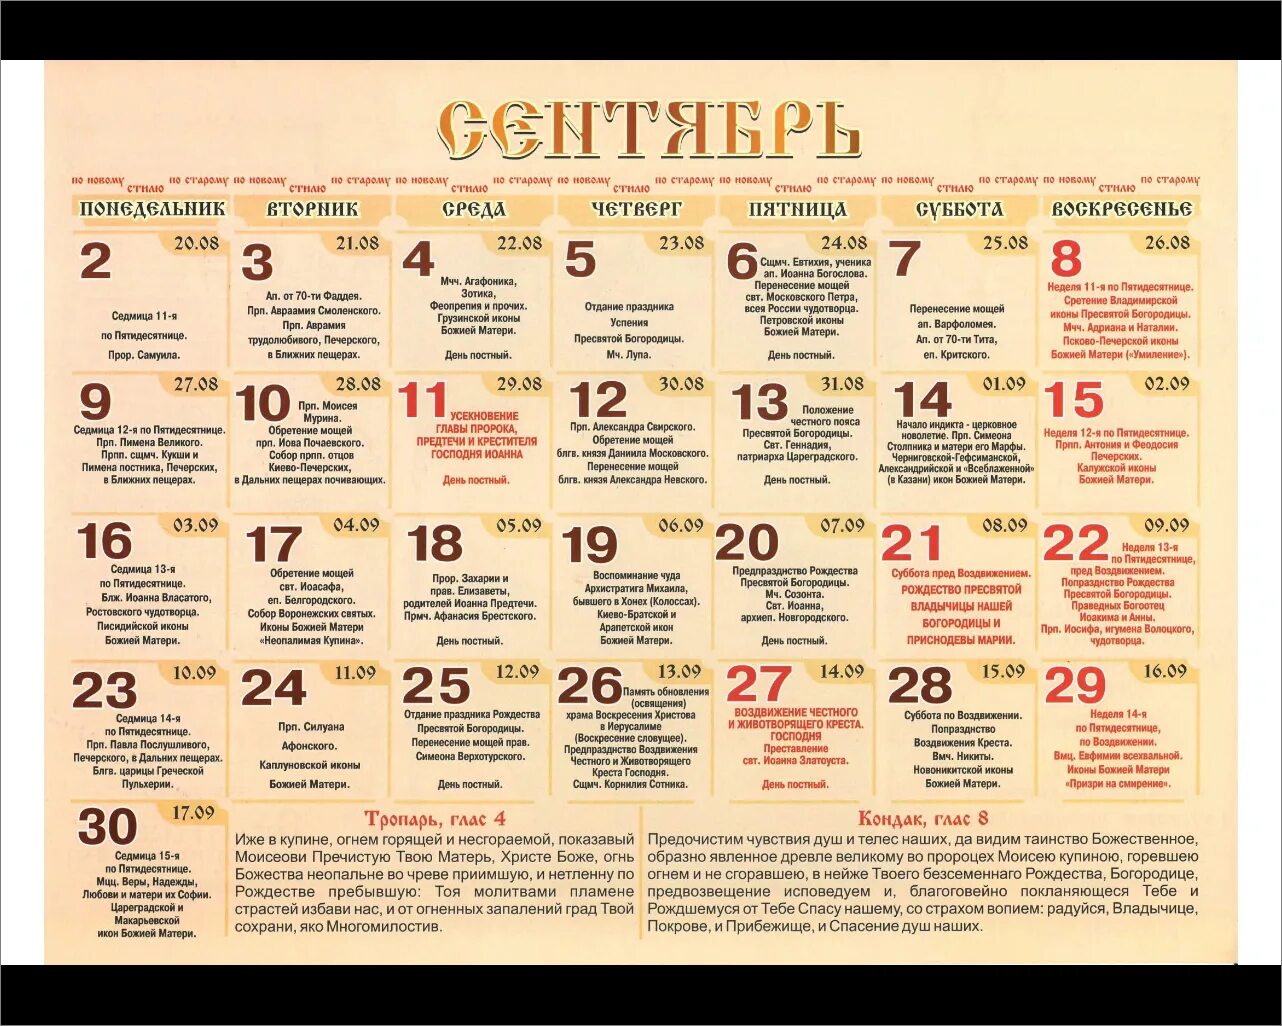 Имена по православному календарю. Православный календарь имен. Православный календарь святых по именам. Какого святого сегодня по православному календарю